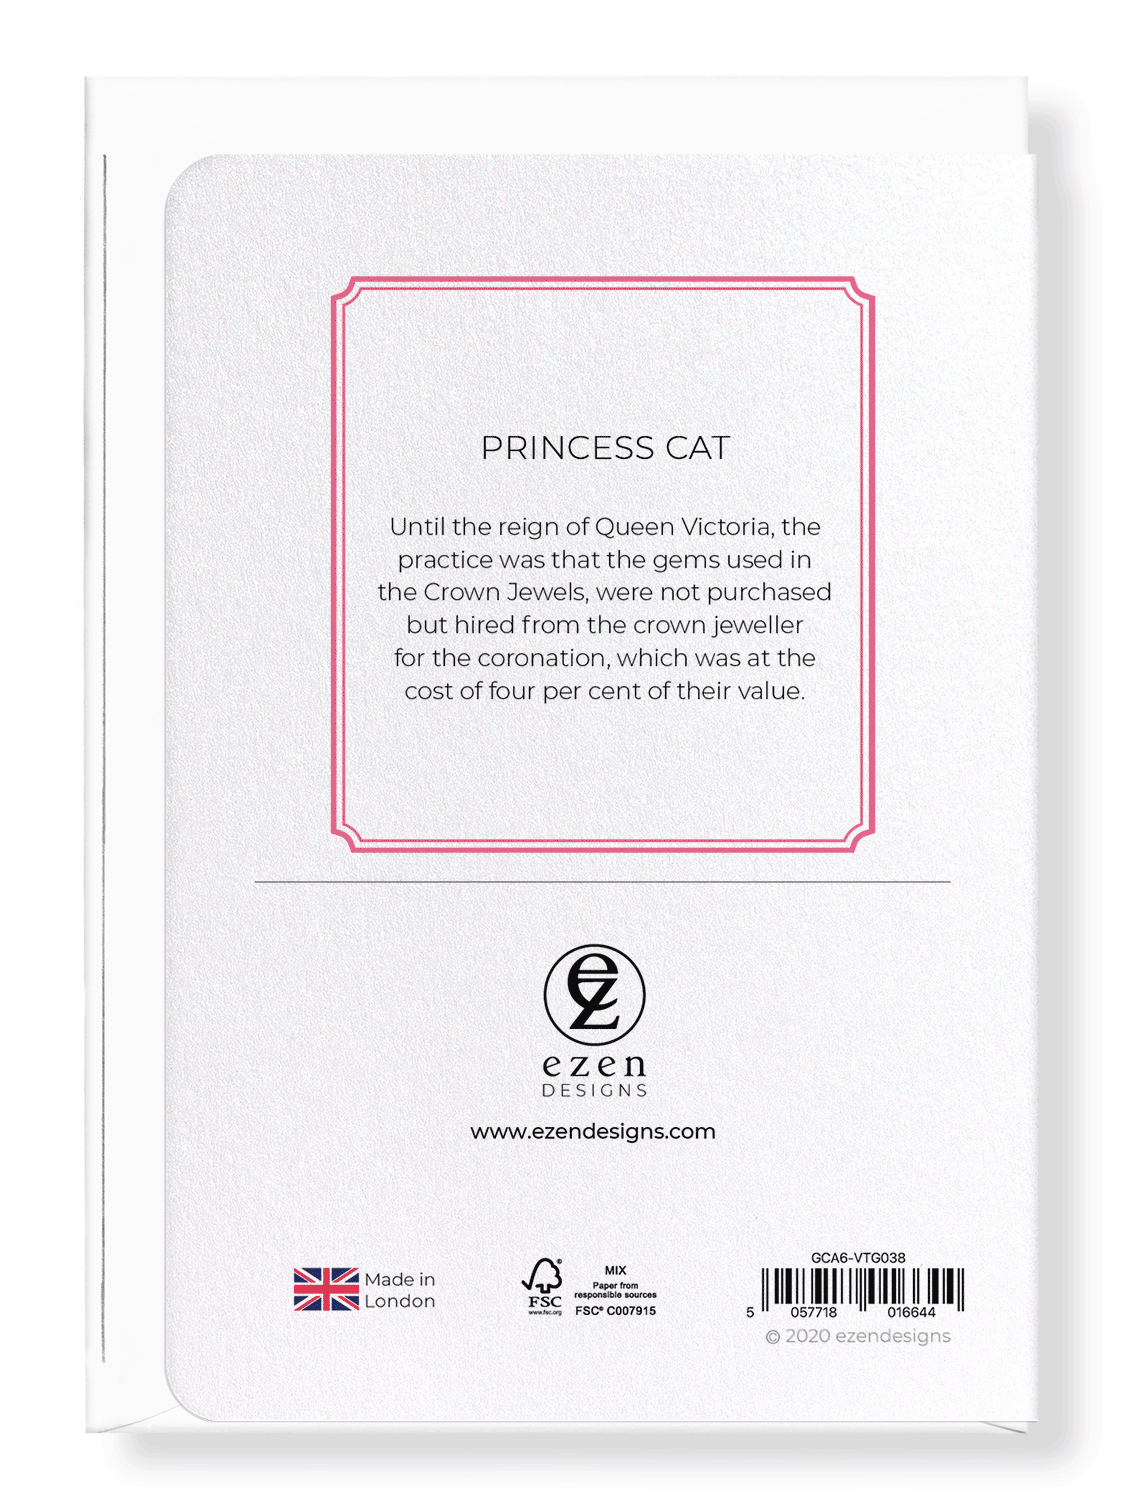 Ezen Designs - Princess cat - Greeting Card - Back